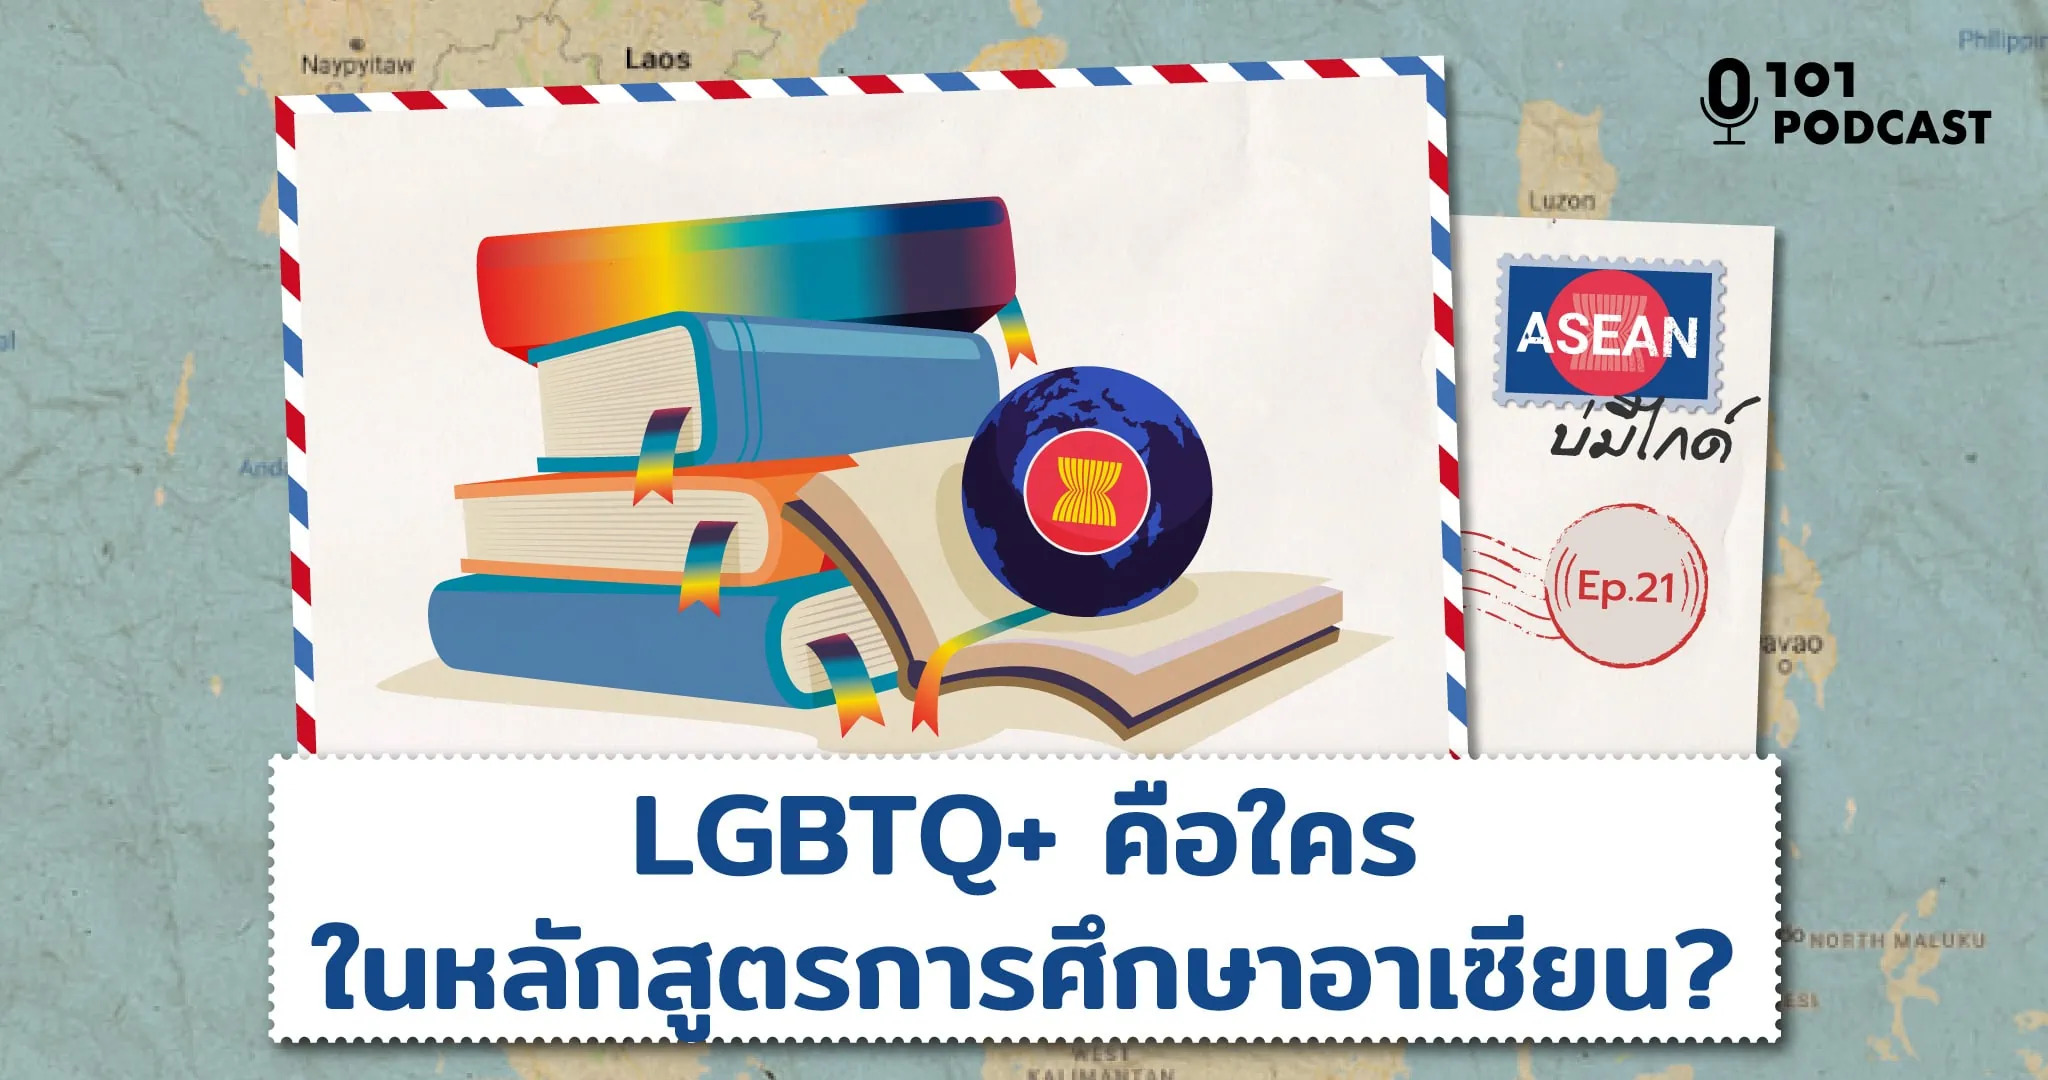 ASEAN บ่มีไกด์ EP.21: LGBTQ+ คือใคร ในหลักสูตรการศึกษาอาเซียน?